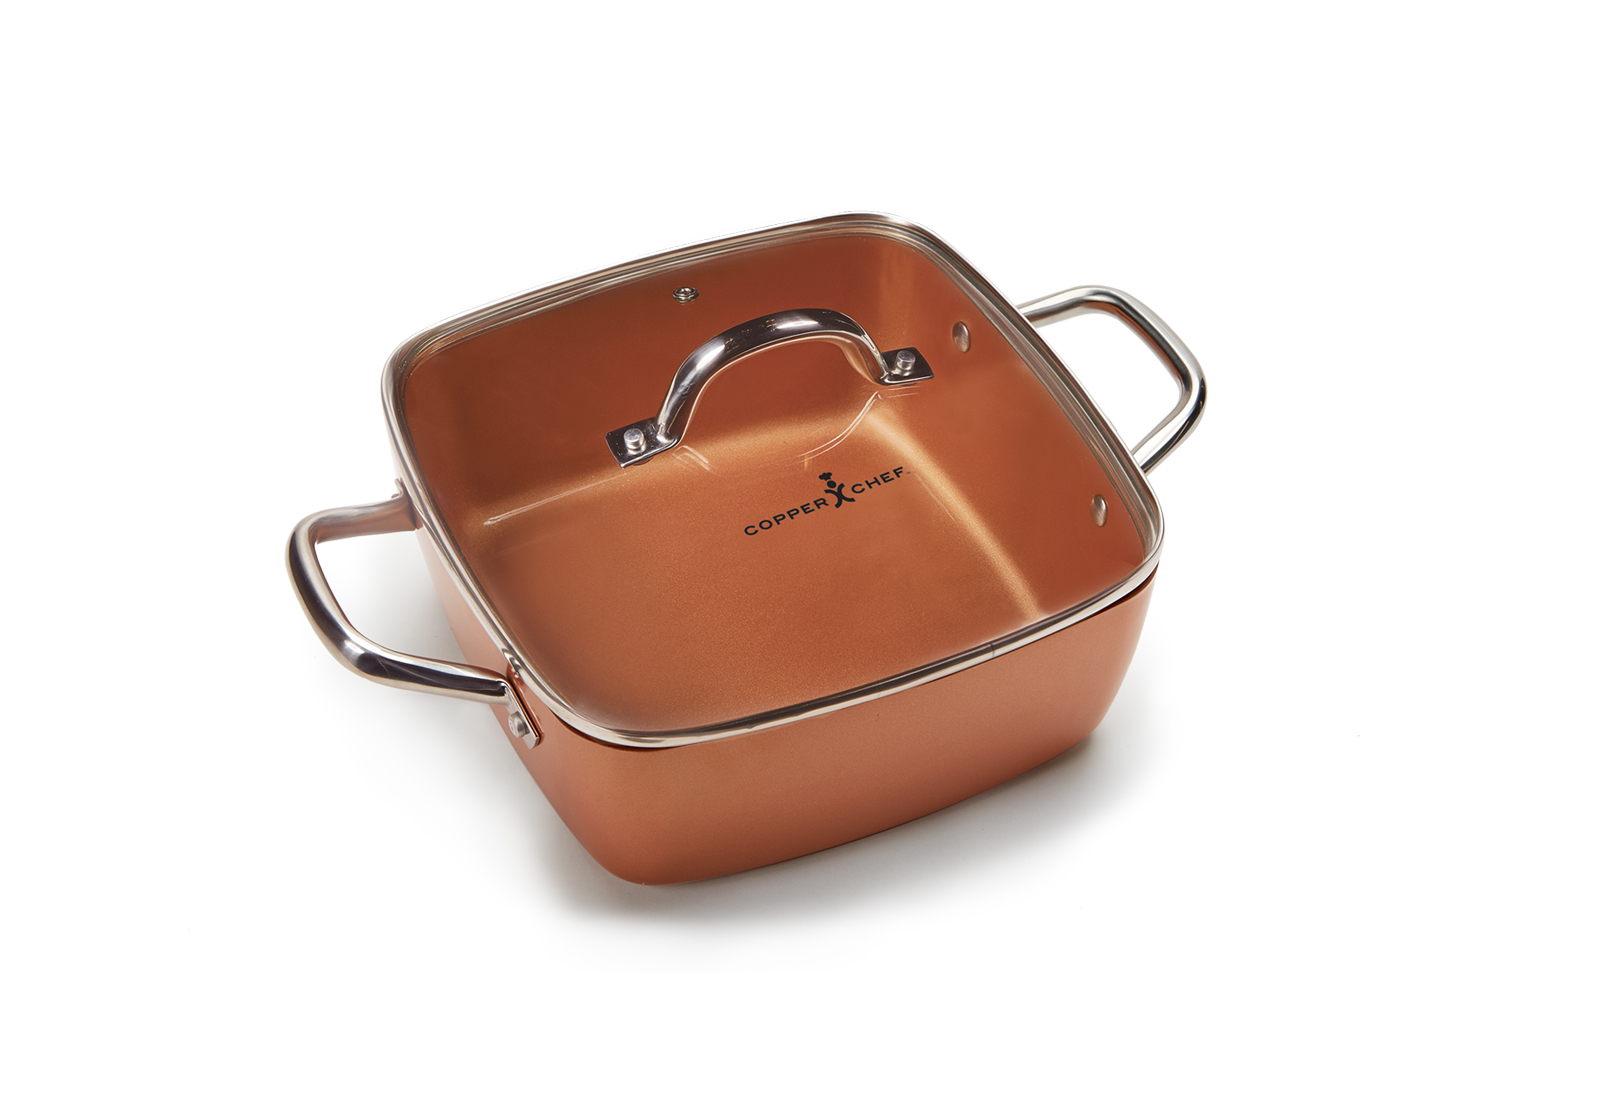 Copper Chef XL Casserole Pan Product Image